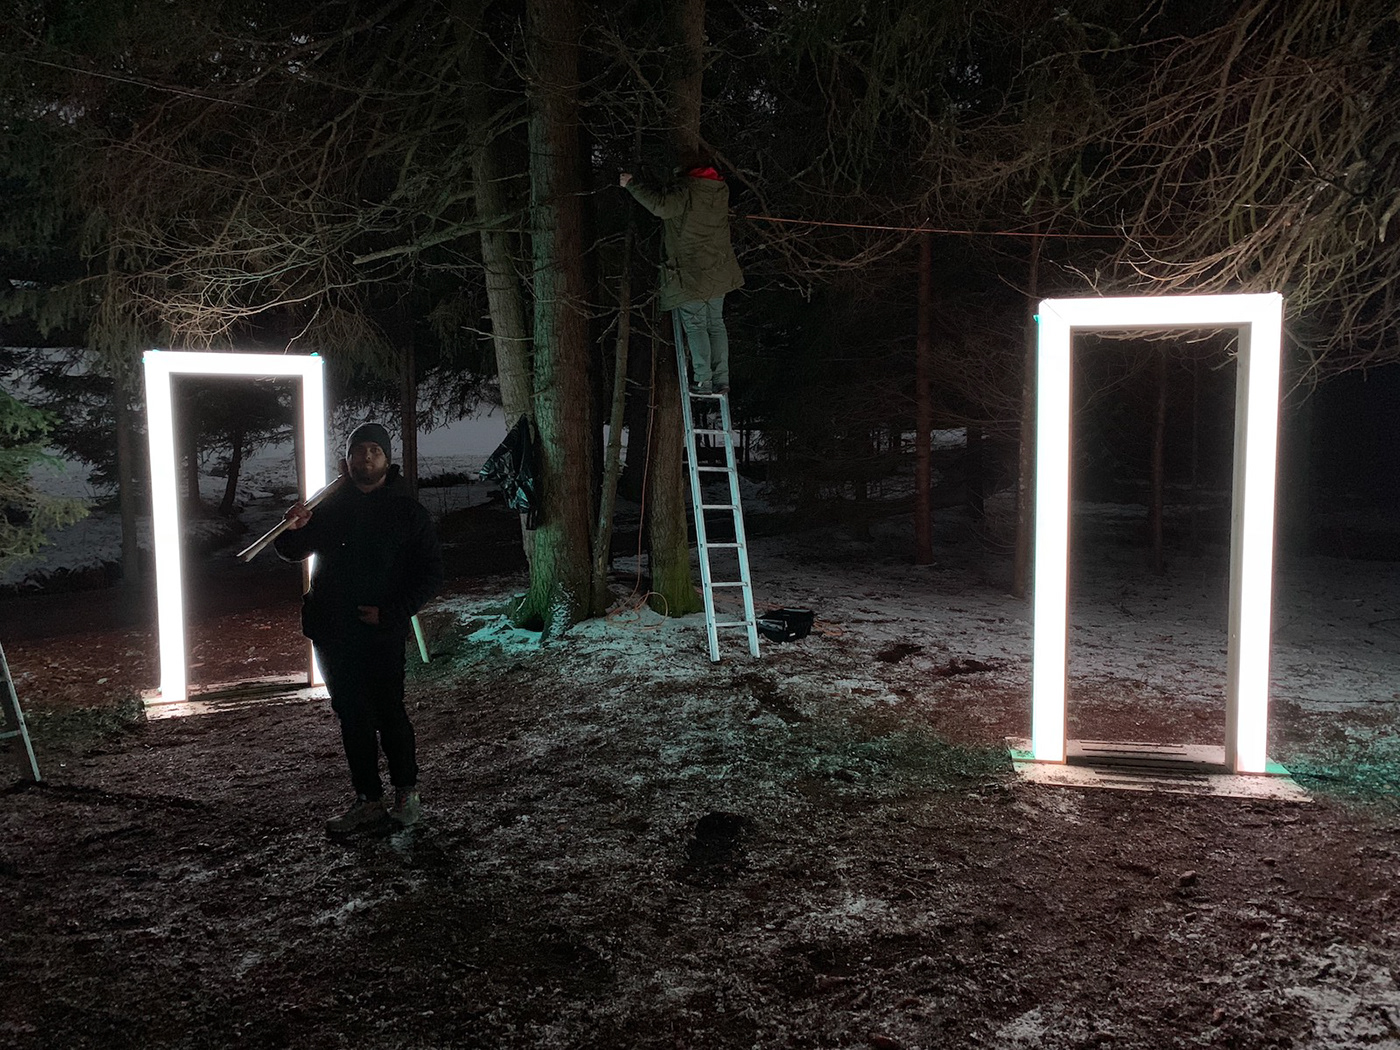 portal door led light installation art spatial creative Outdoor forest